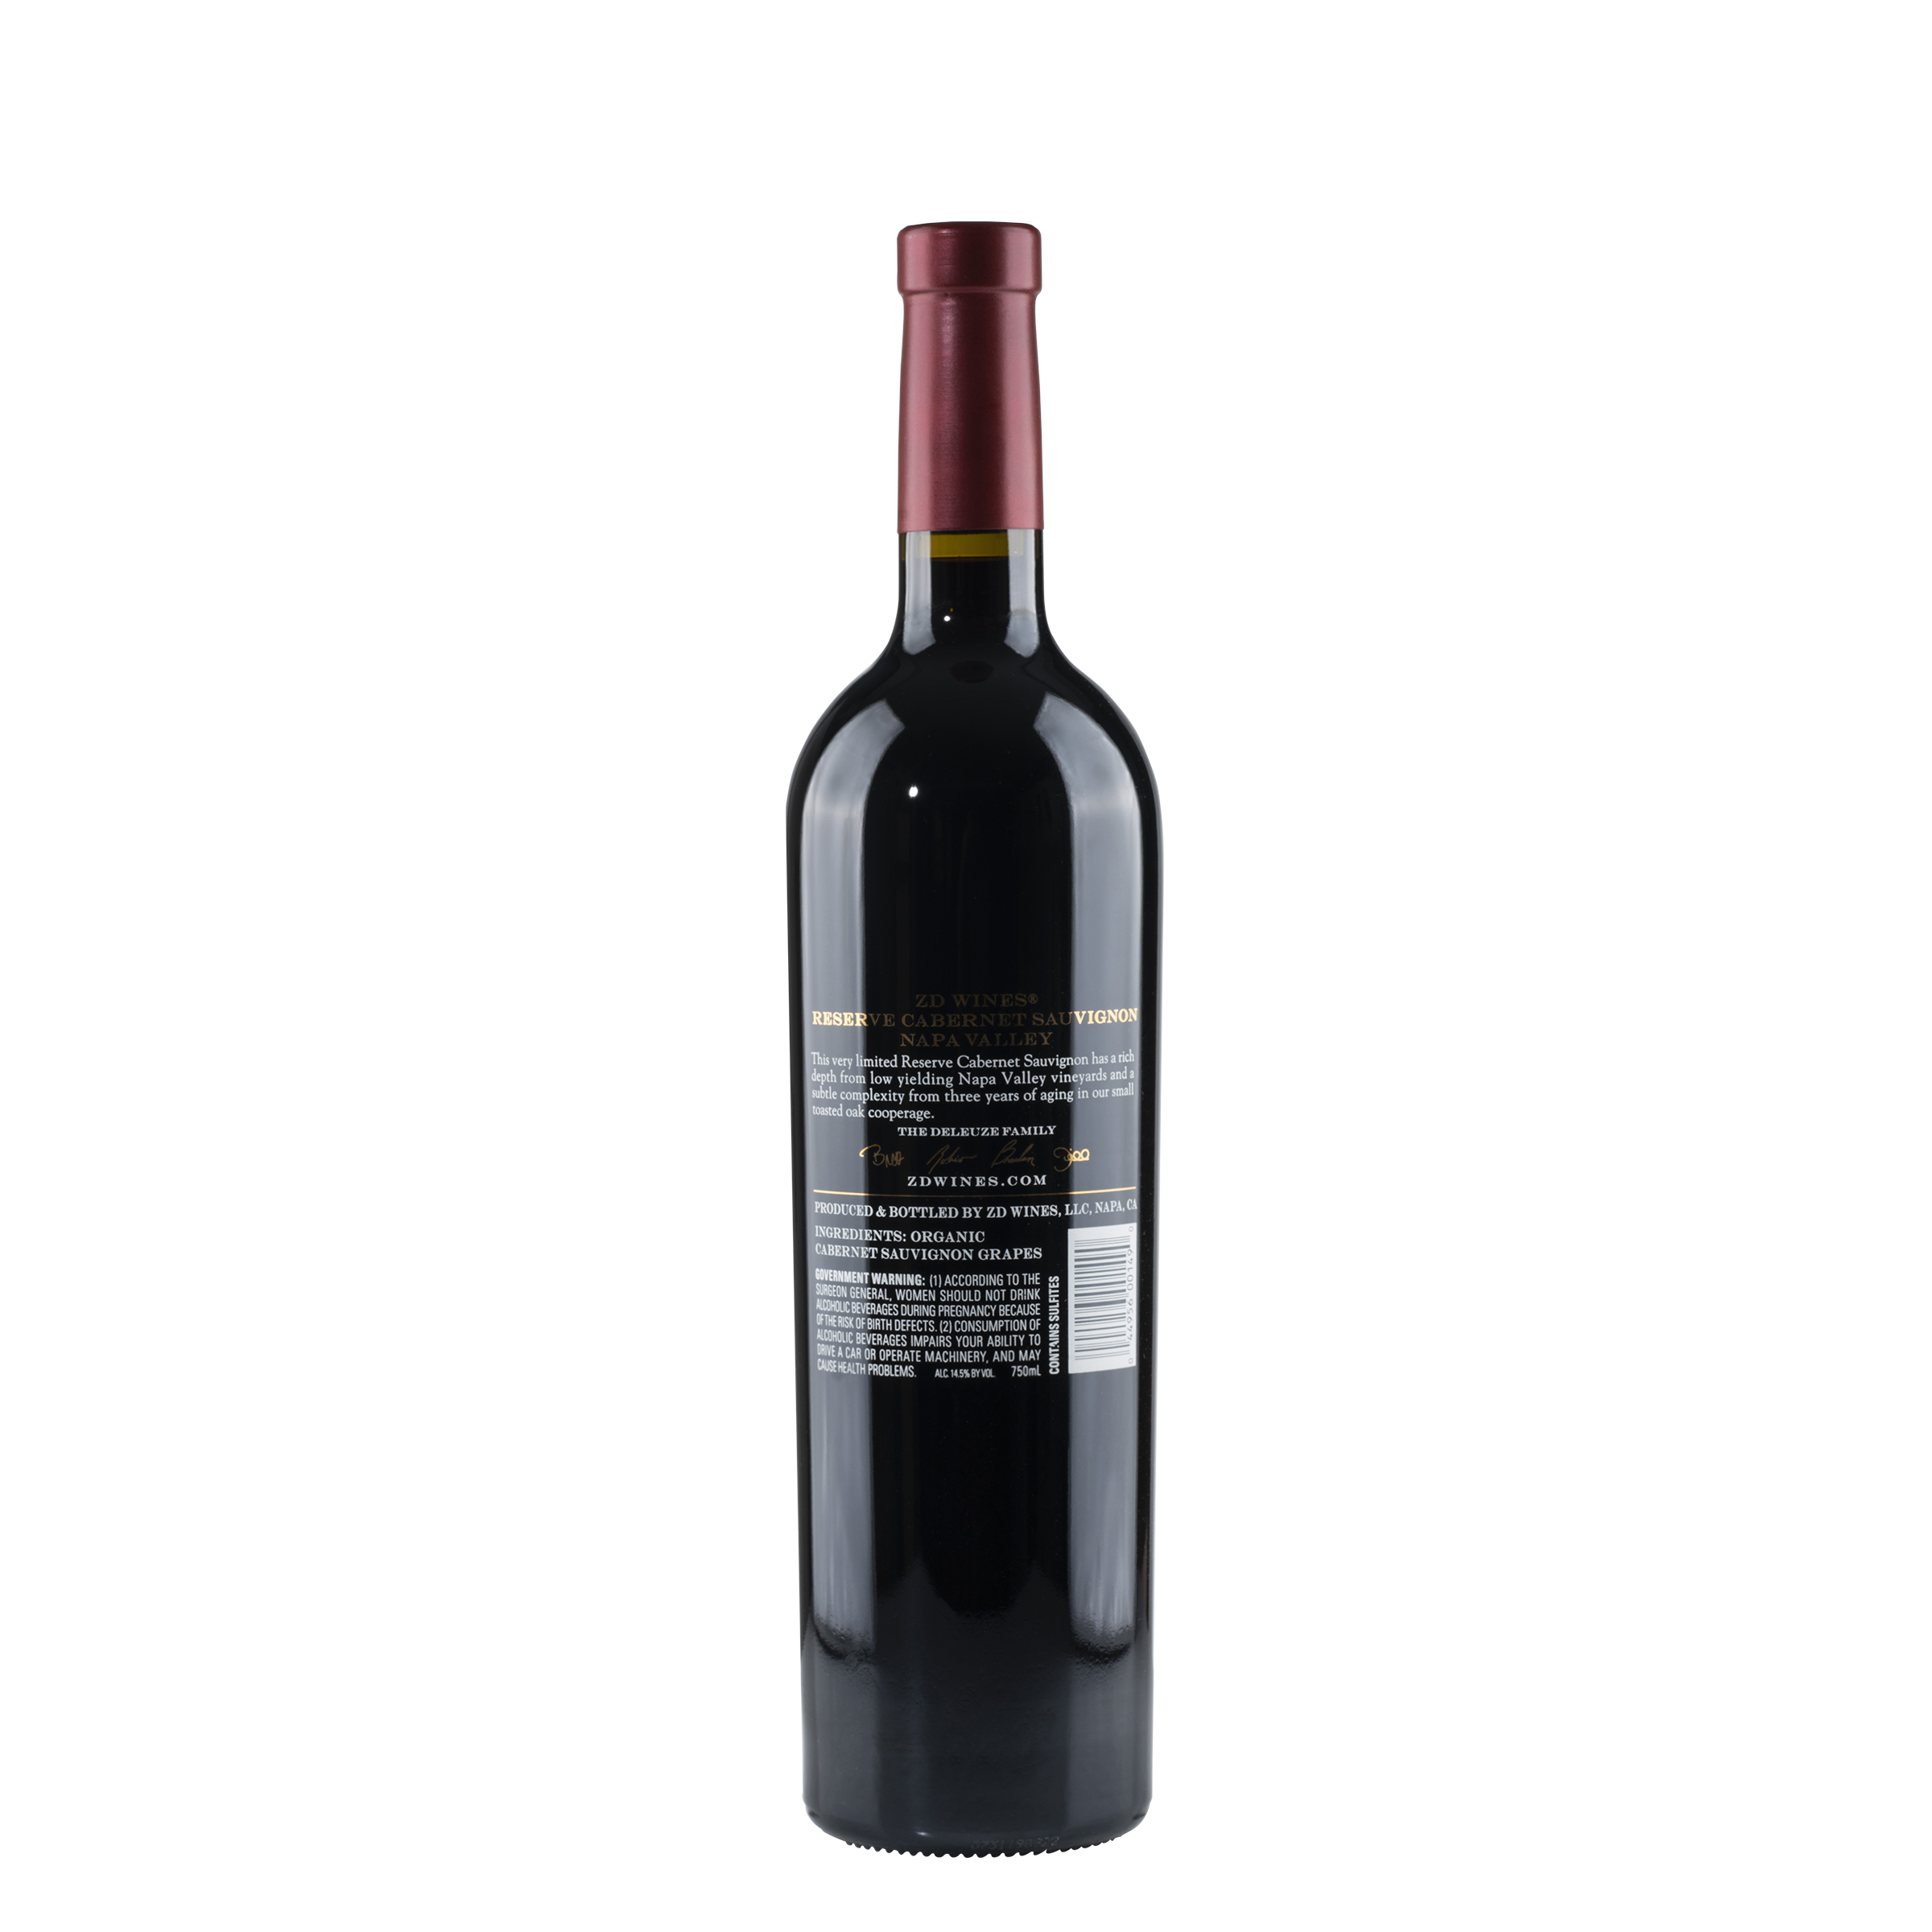 ZD Wines Reserve Cabernet Sauvignon Napa Valley 2016 Bottle Back